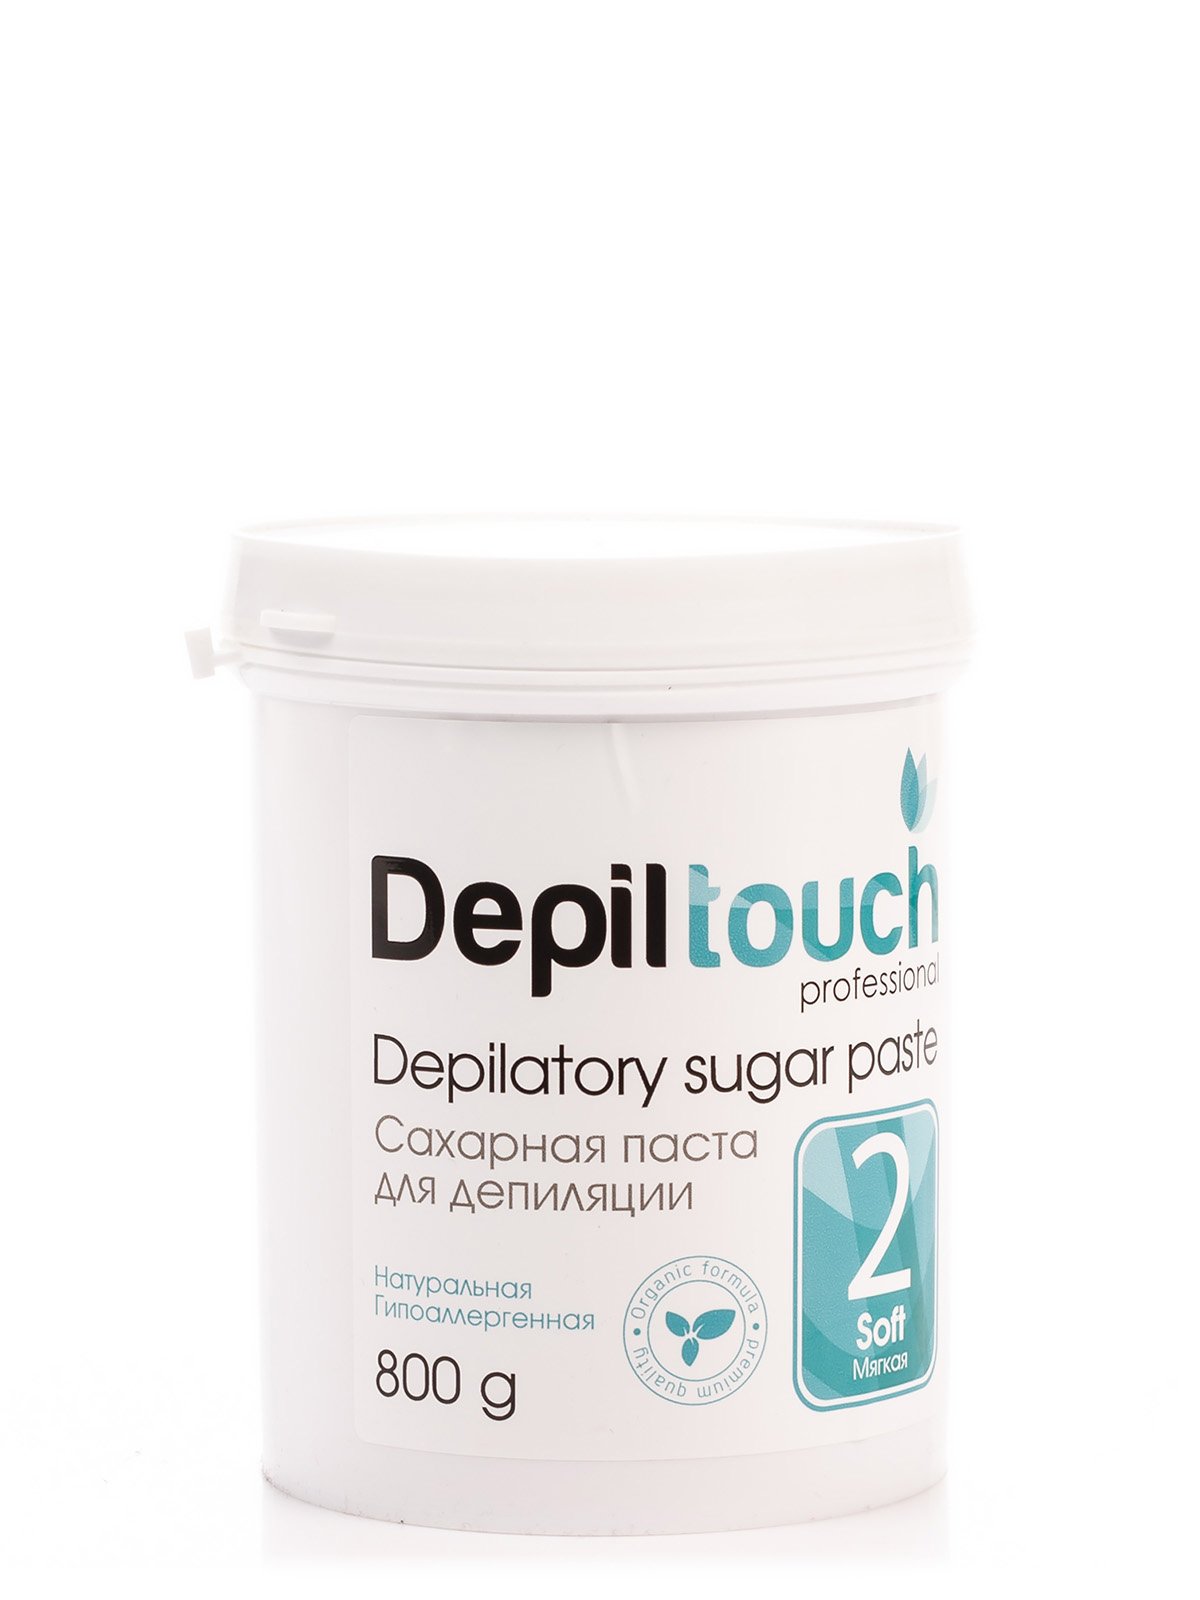 Паста сахарная для депиляции мягкая Depiltouch professional (800 г) | 3963240